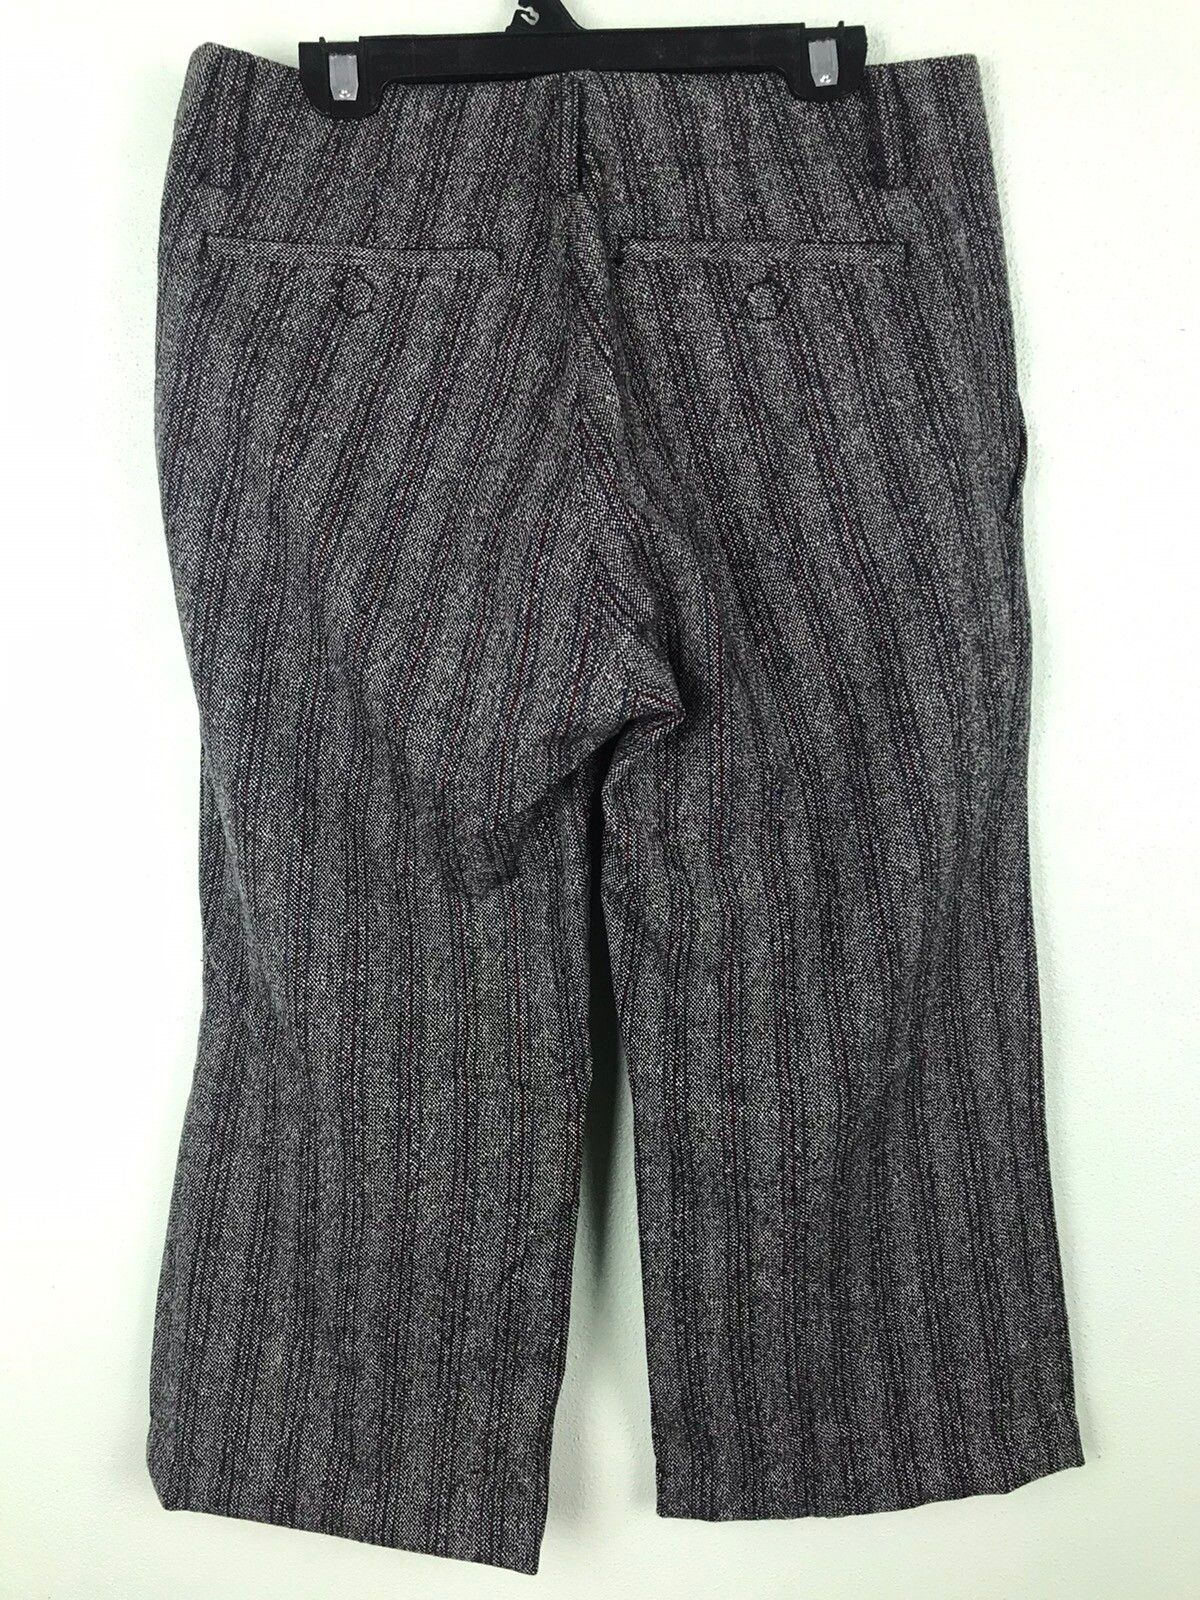 LAST DROP!! AD2004 CDG tricot custom crop pants - gh0420 - 5